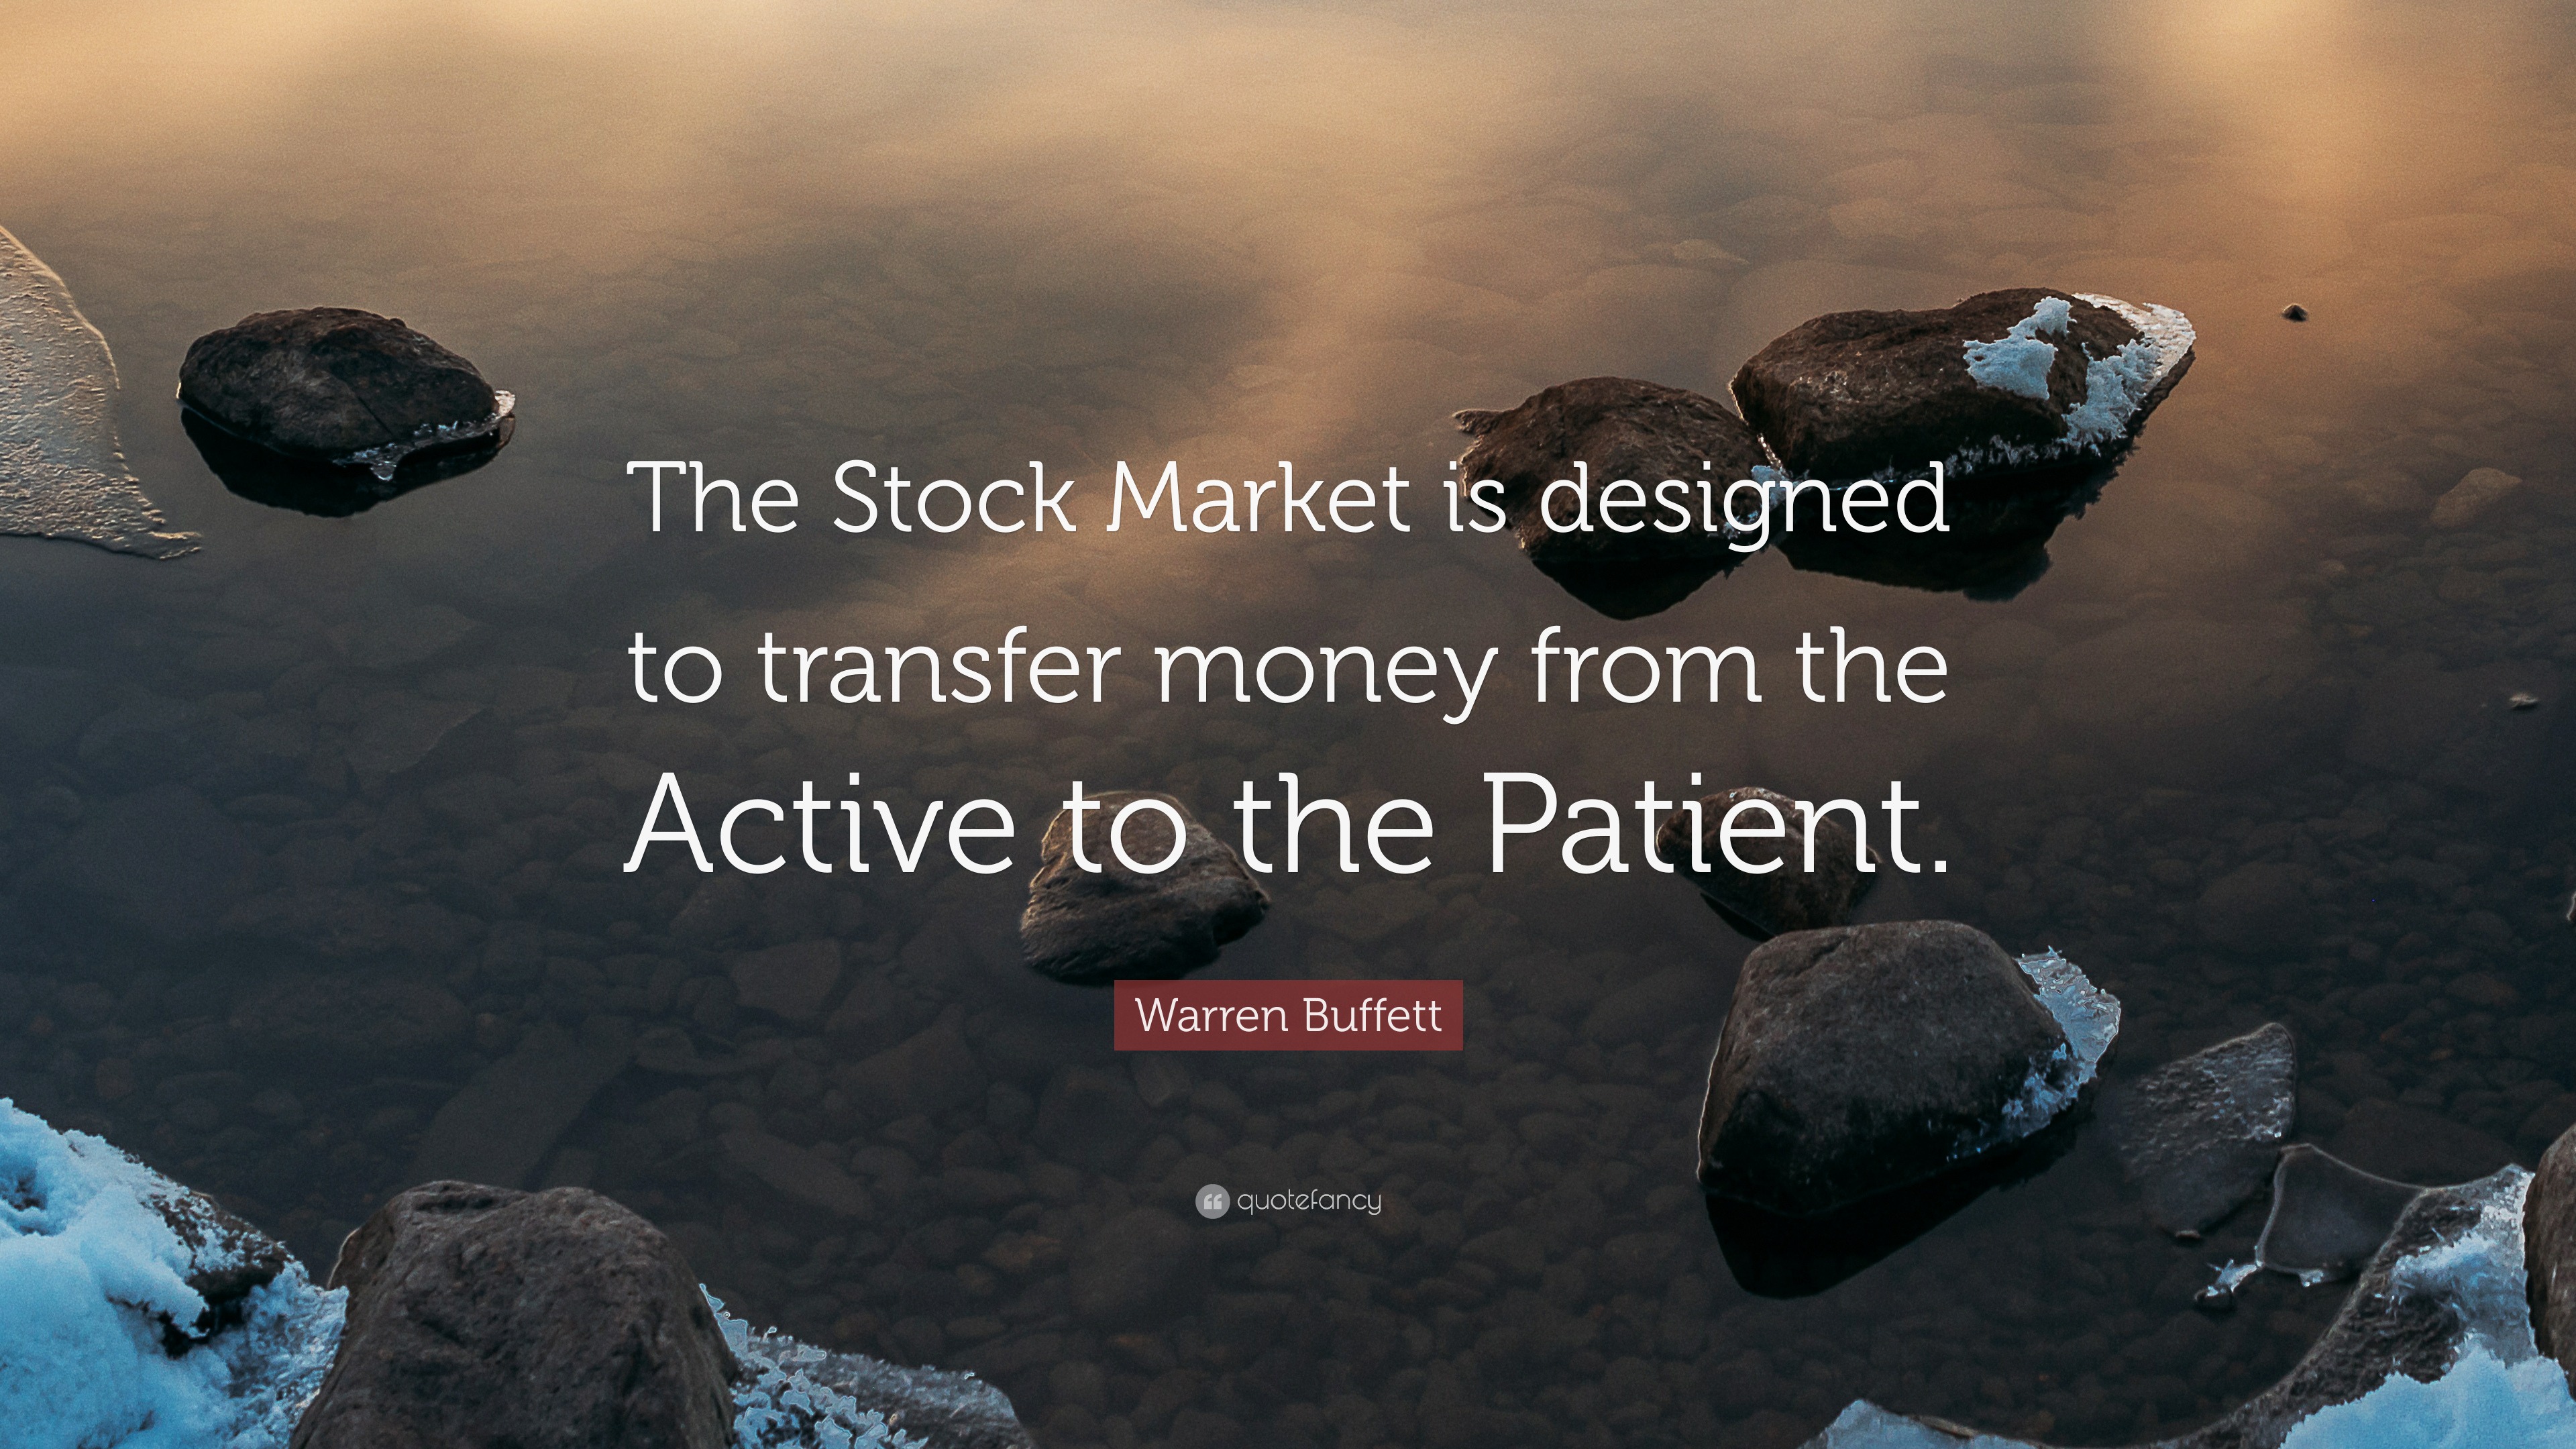 Warren Buffett Quote “The Stock Market is designed to